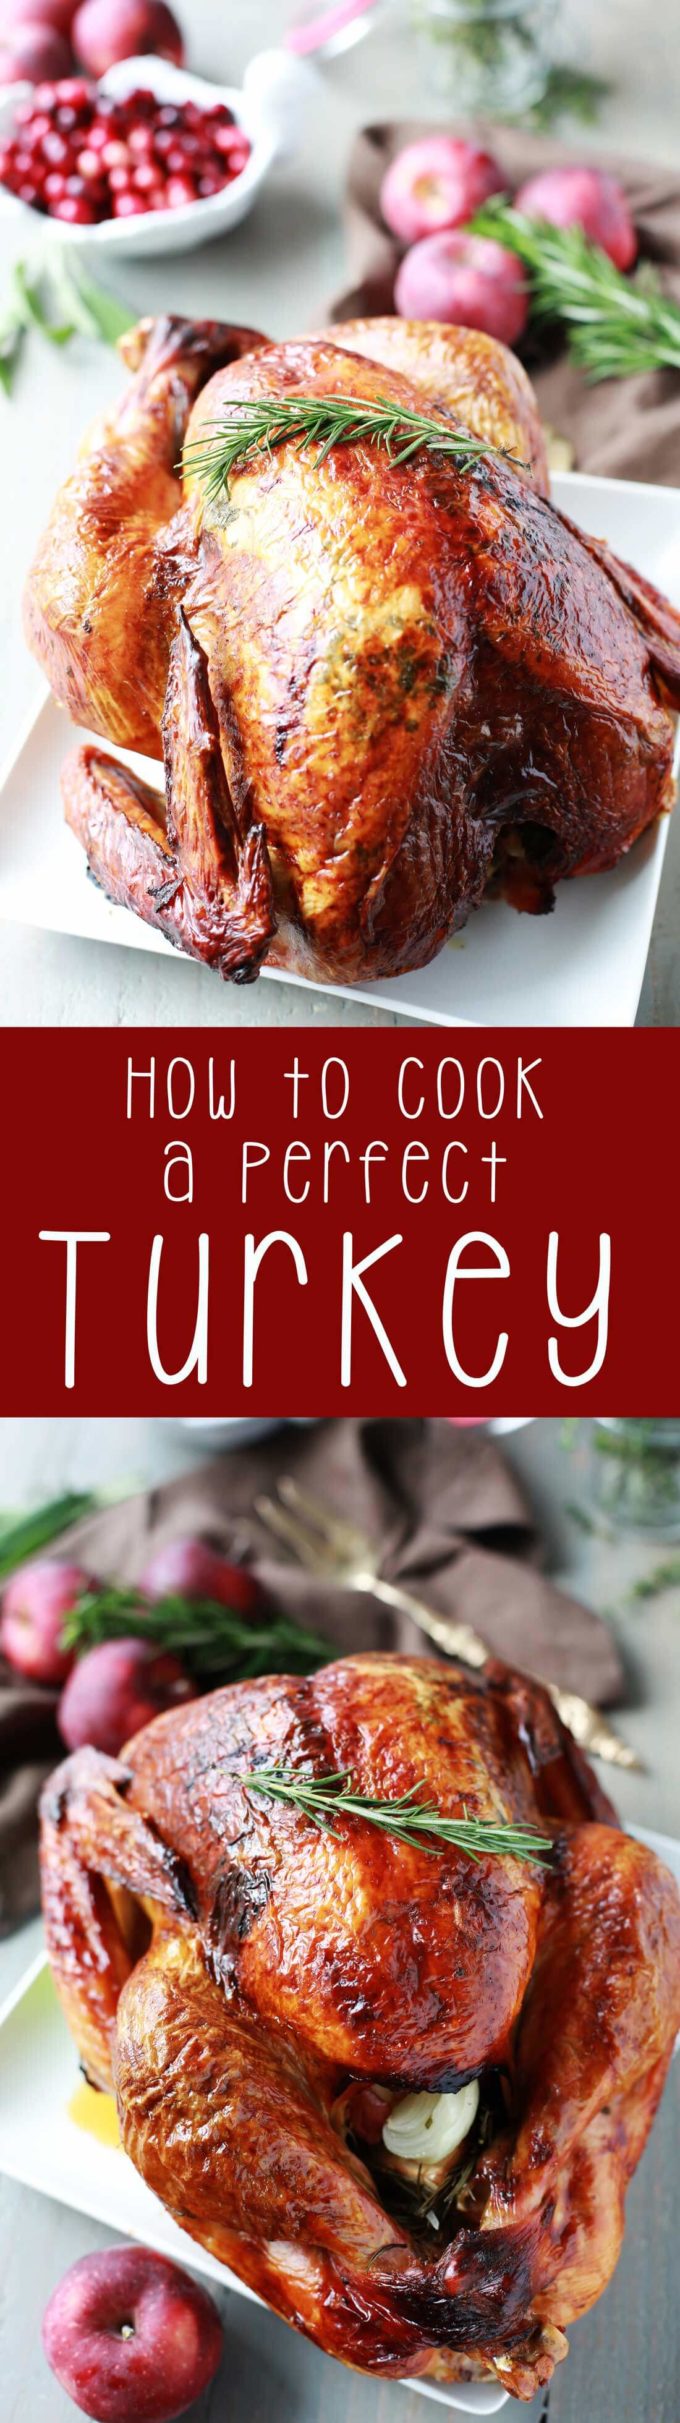 https://www.eazypeazymealz.com/wp-content/uploads/2016/06/how-to-cook-a-turkeyPIN.jpg